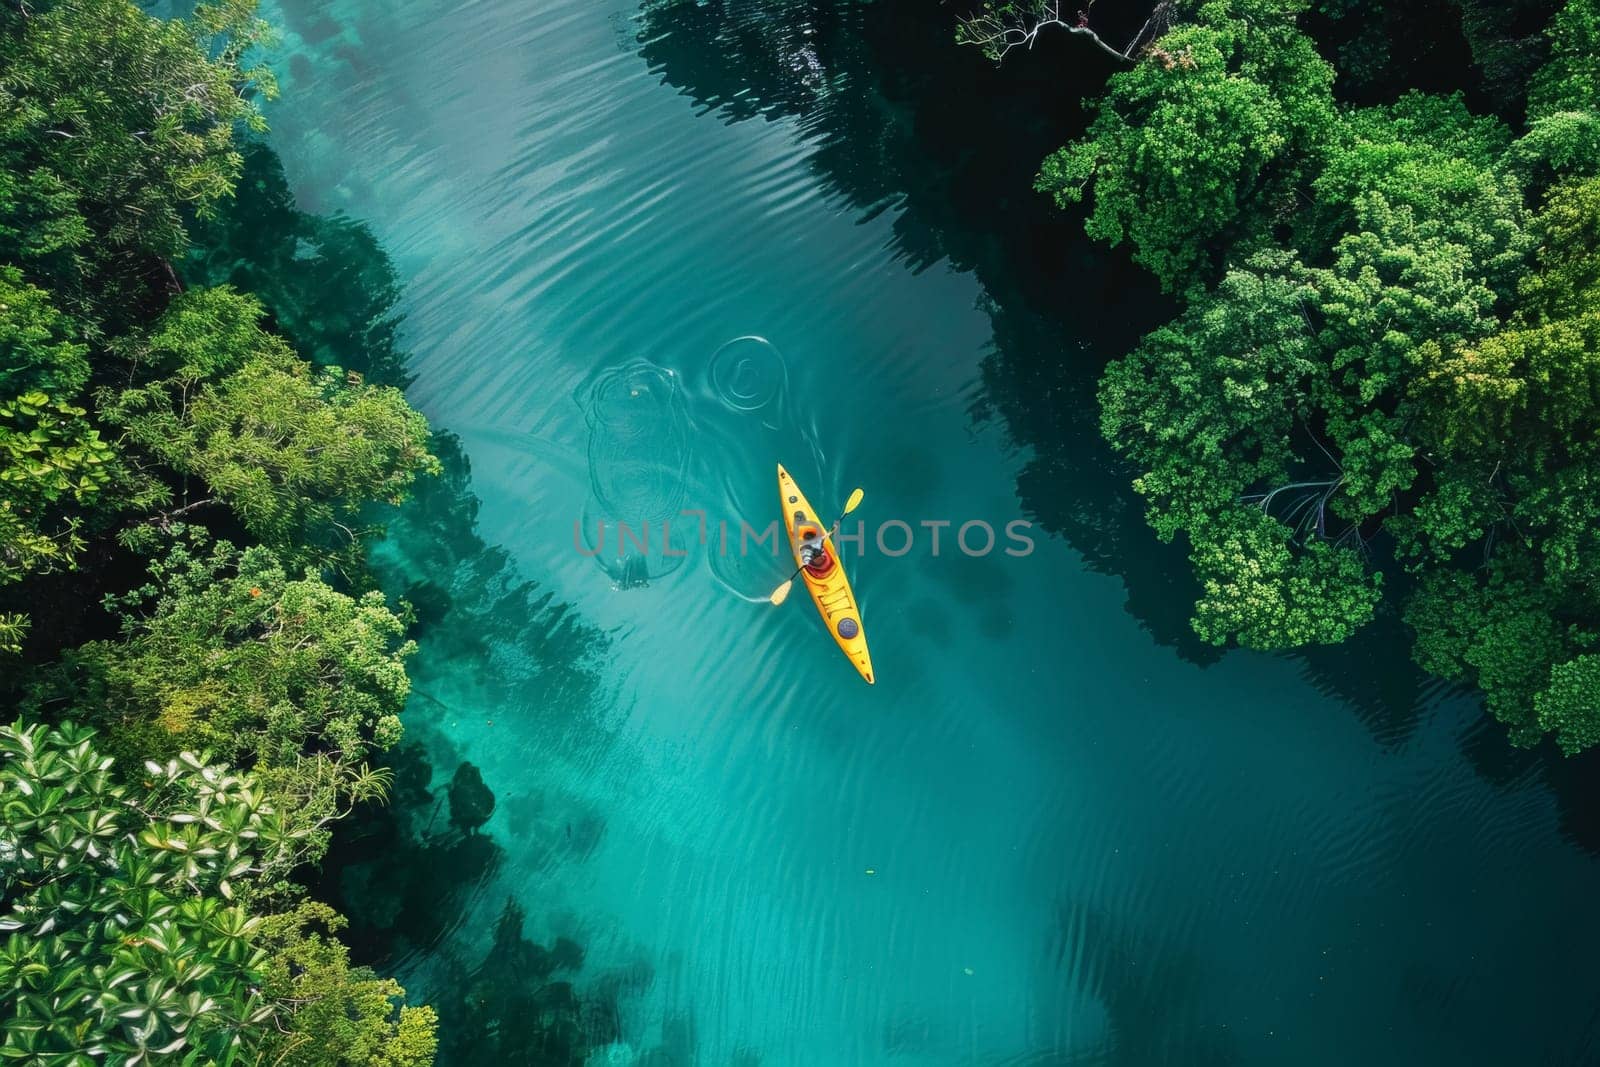 Kayak Adventure in Lagoon by andreyz